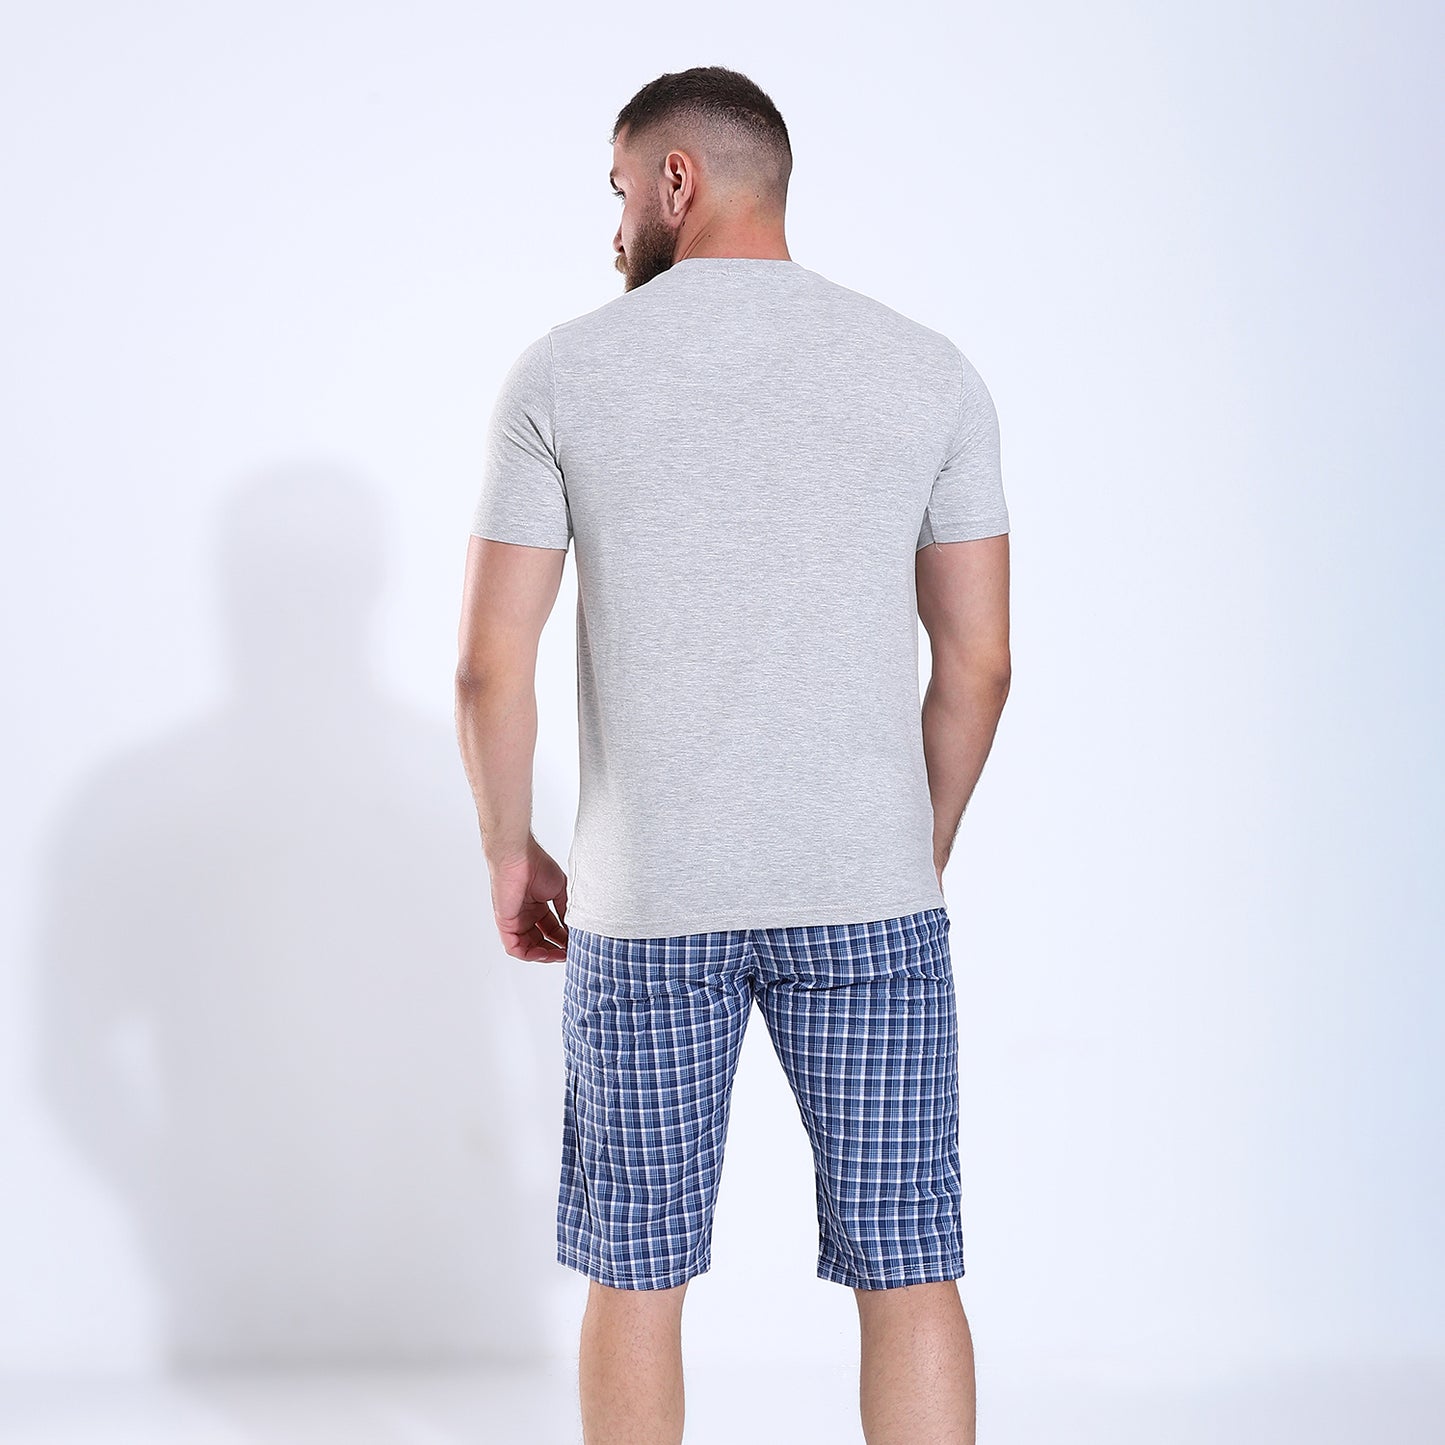 Men's Checkered Shorts Pajama